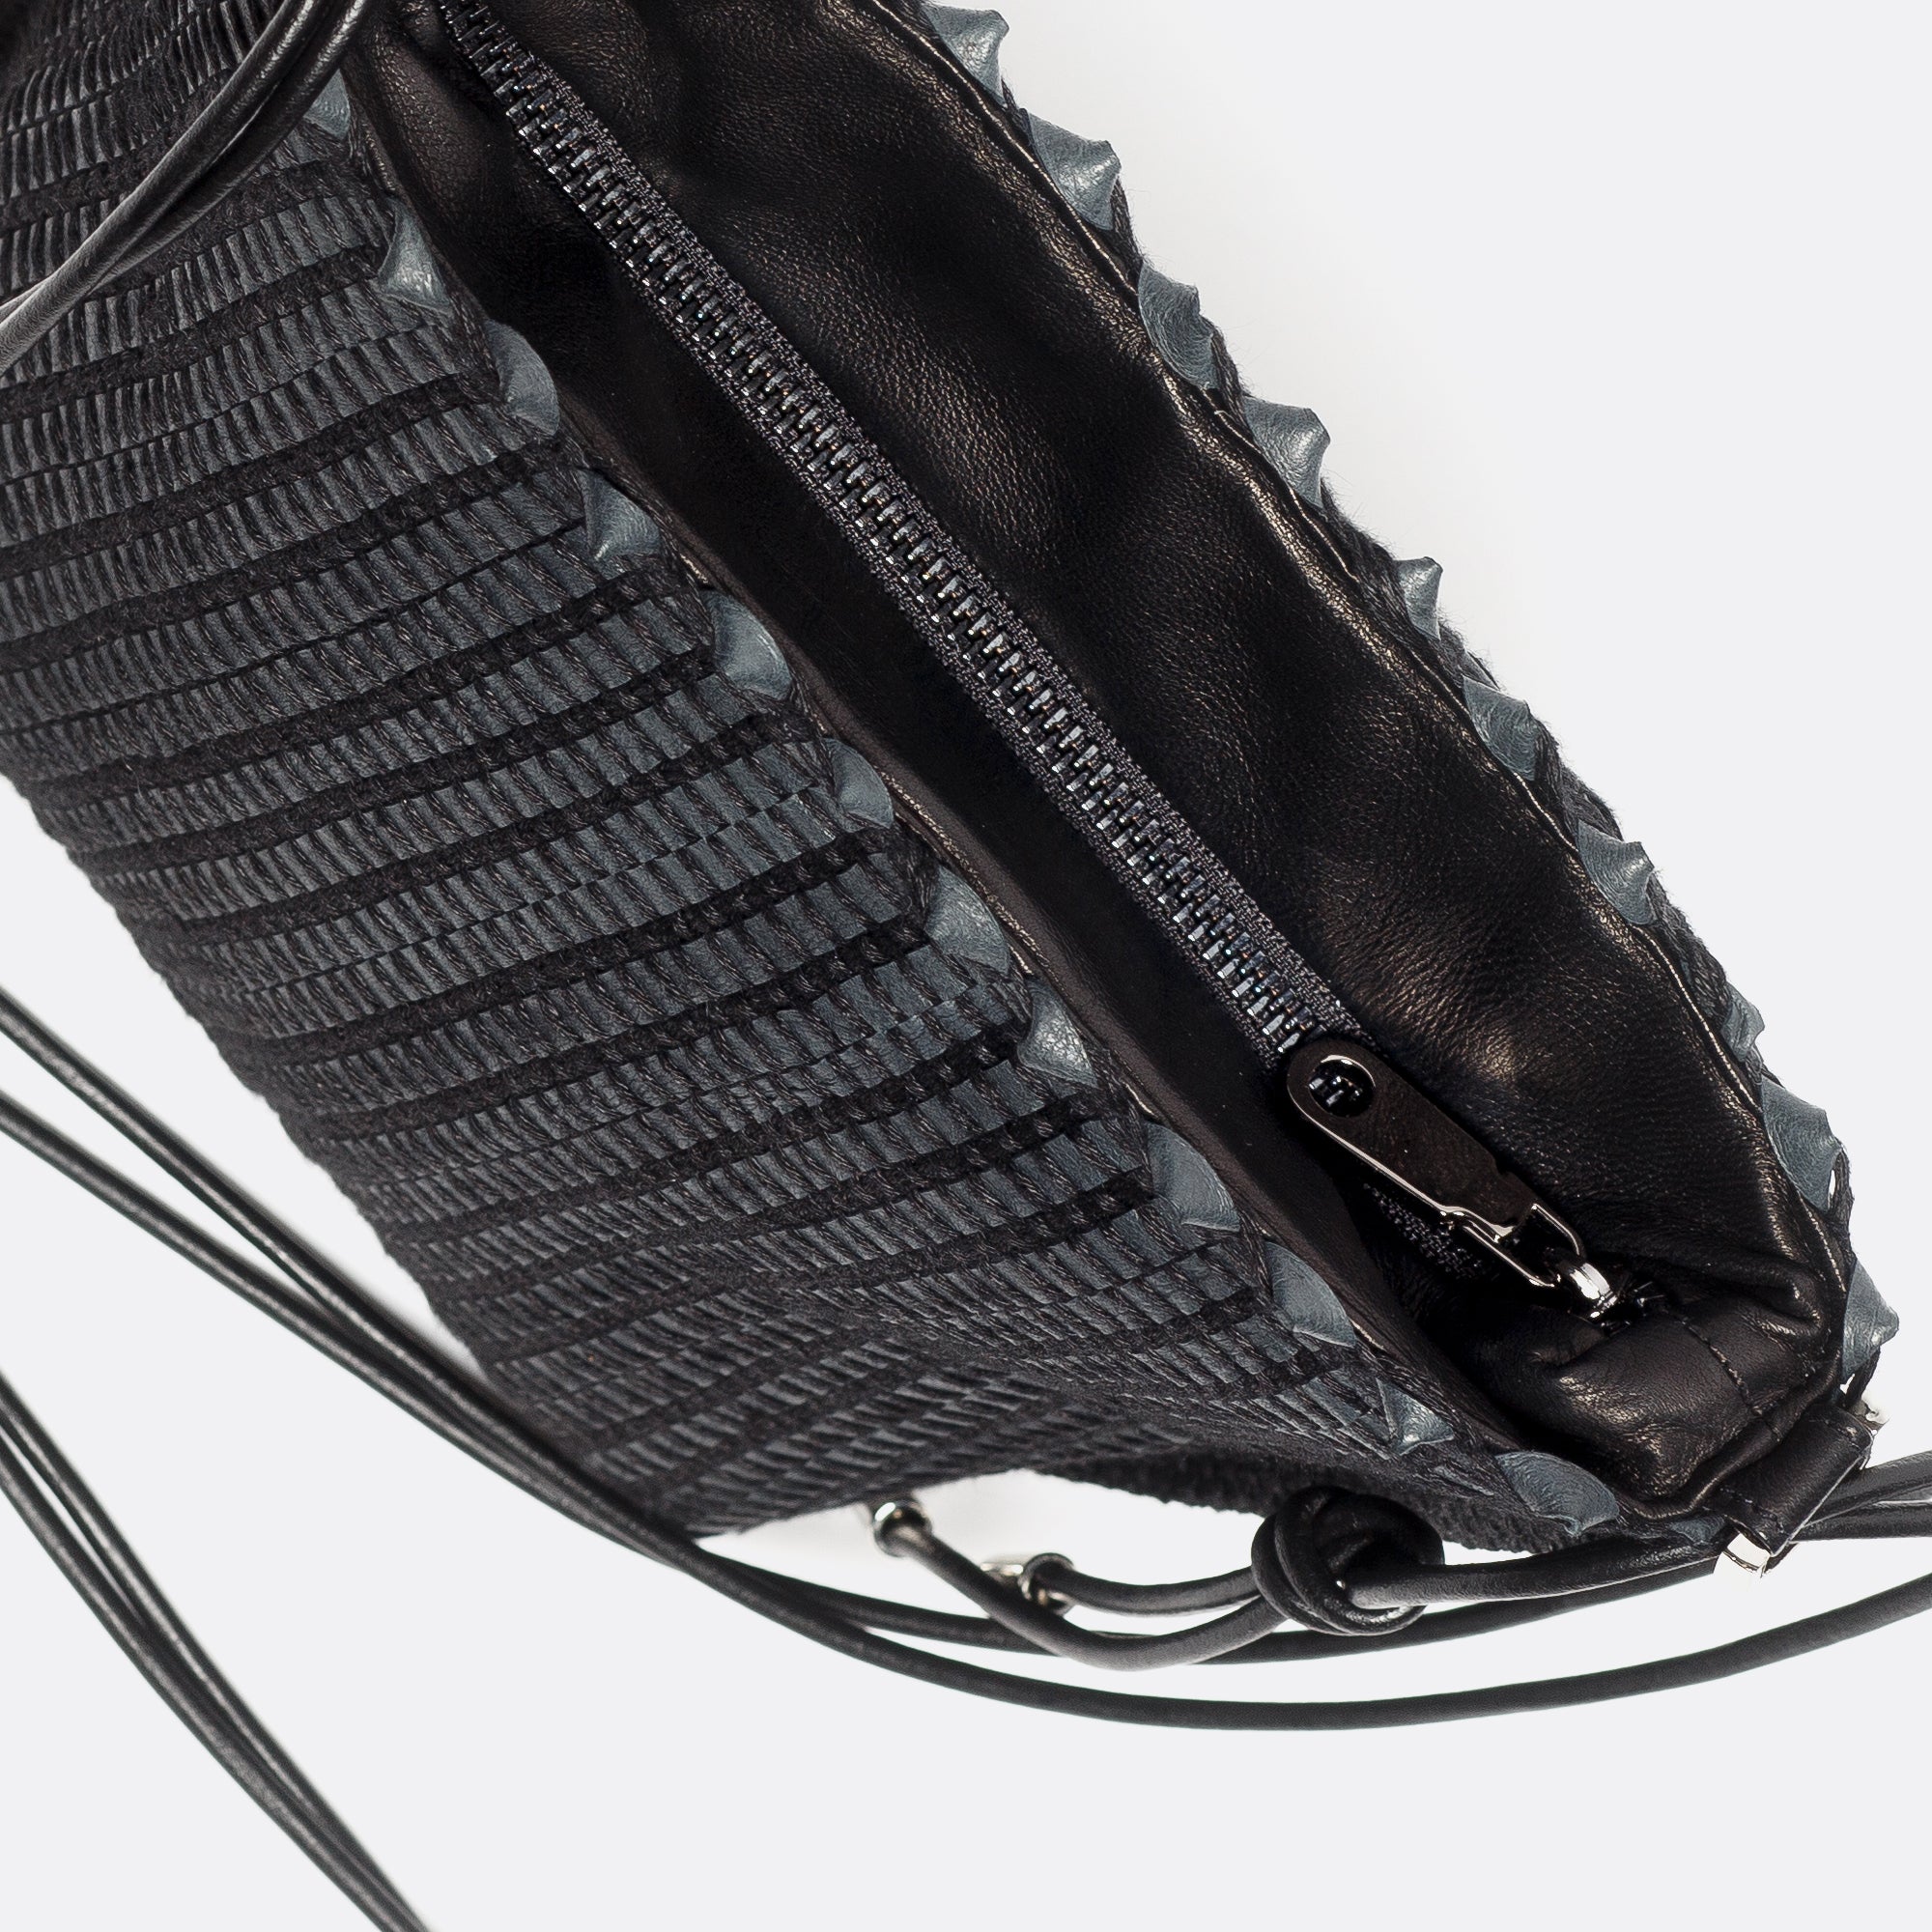 Handwoven Bag AUSTĖ #36 black leather and linen